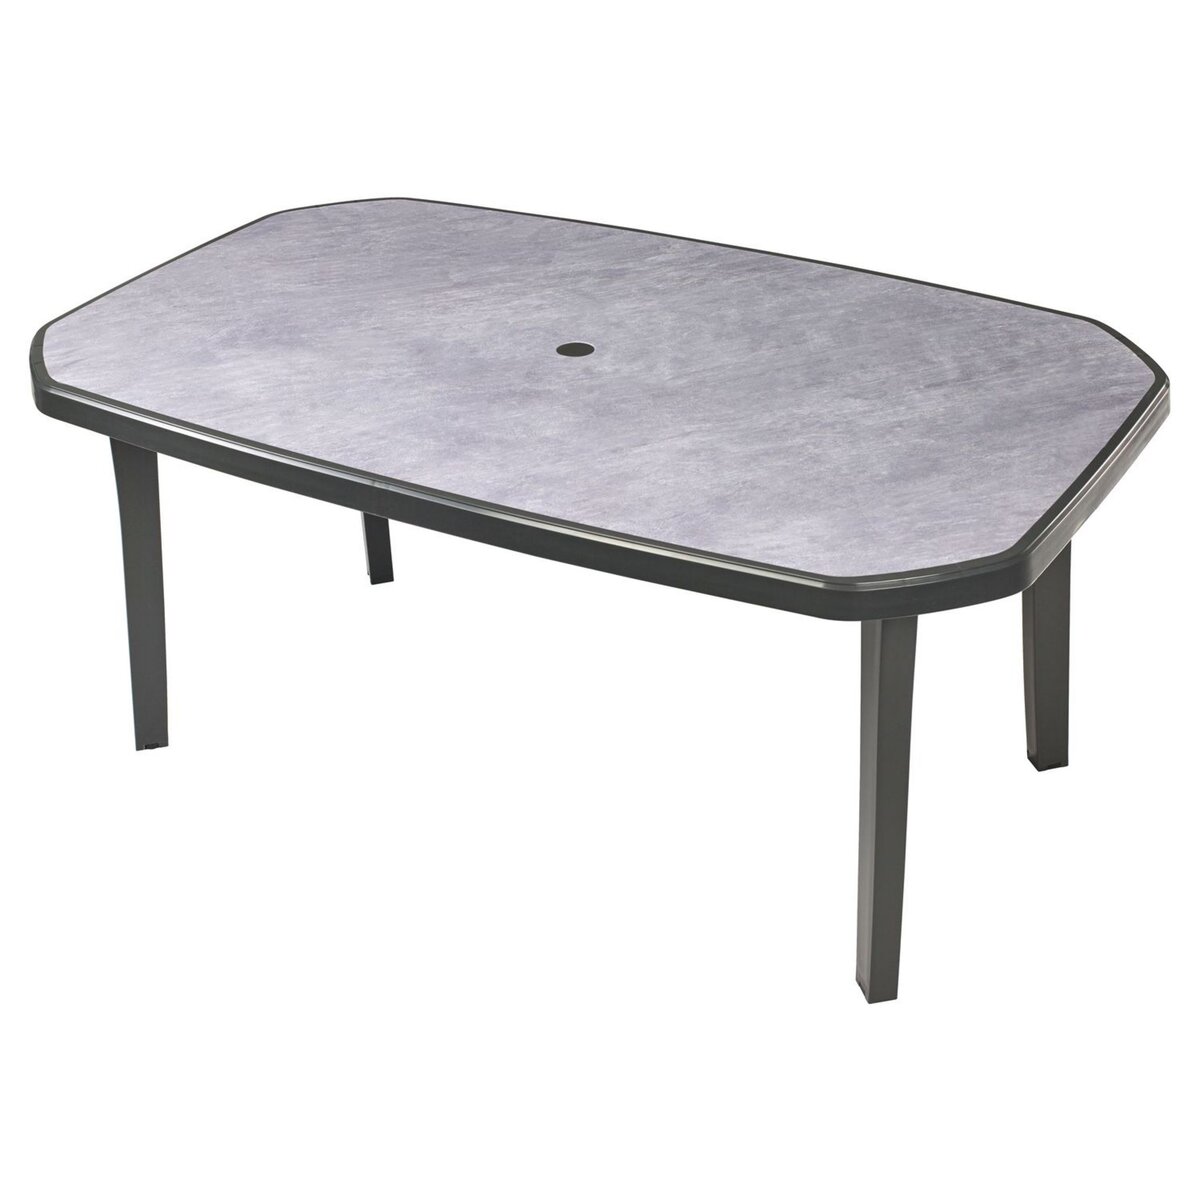 Table de jardin - 165x100cm - Gris - MIAMI